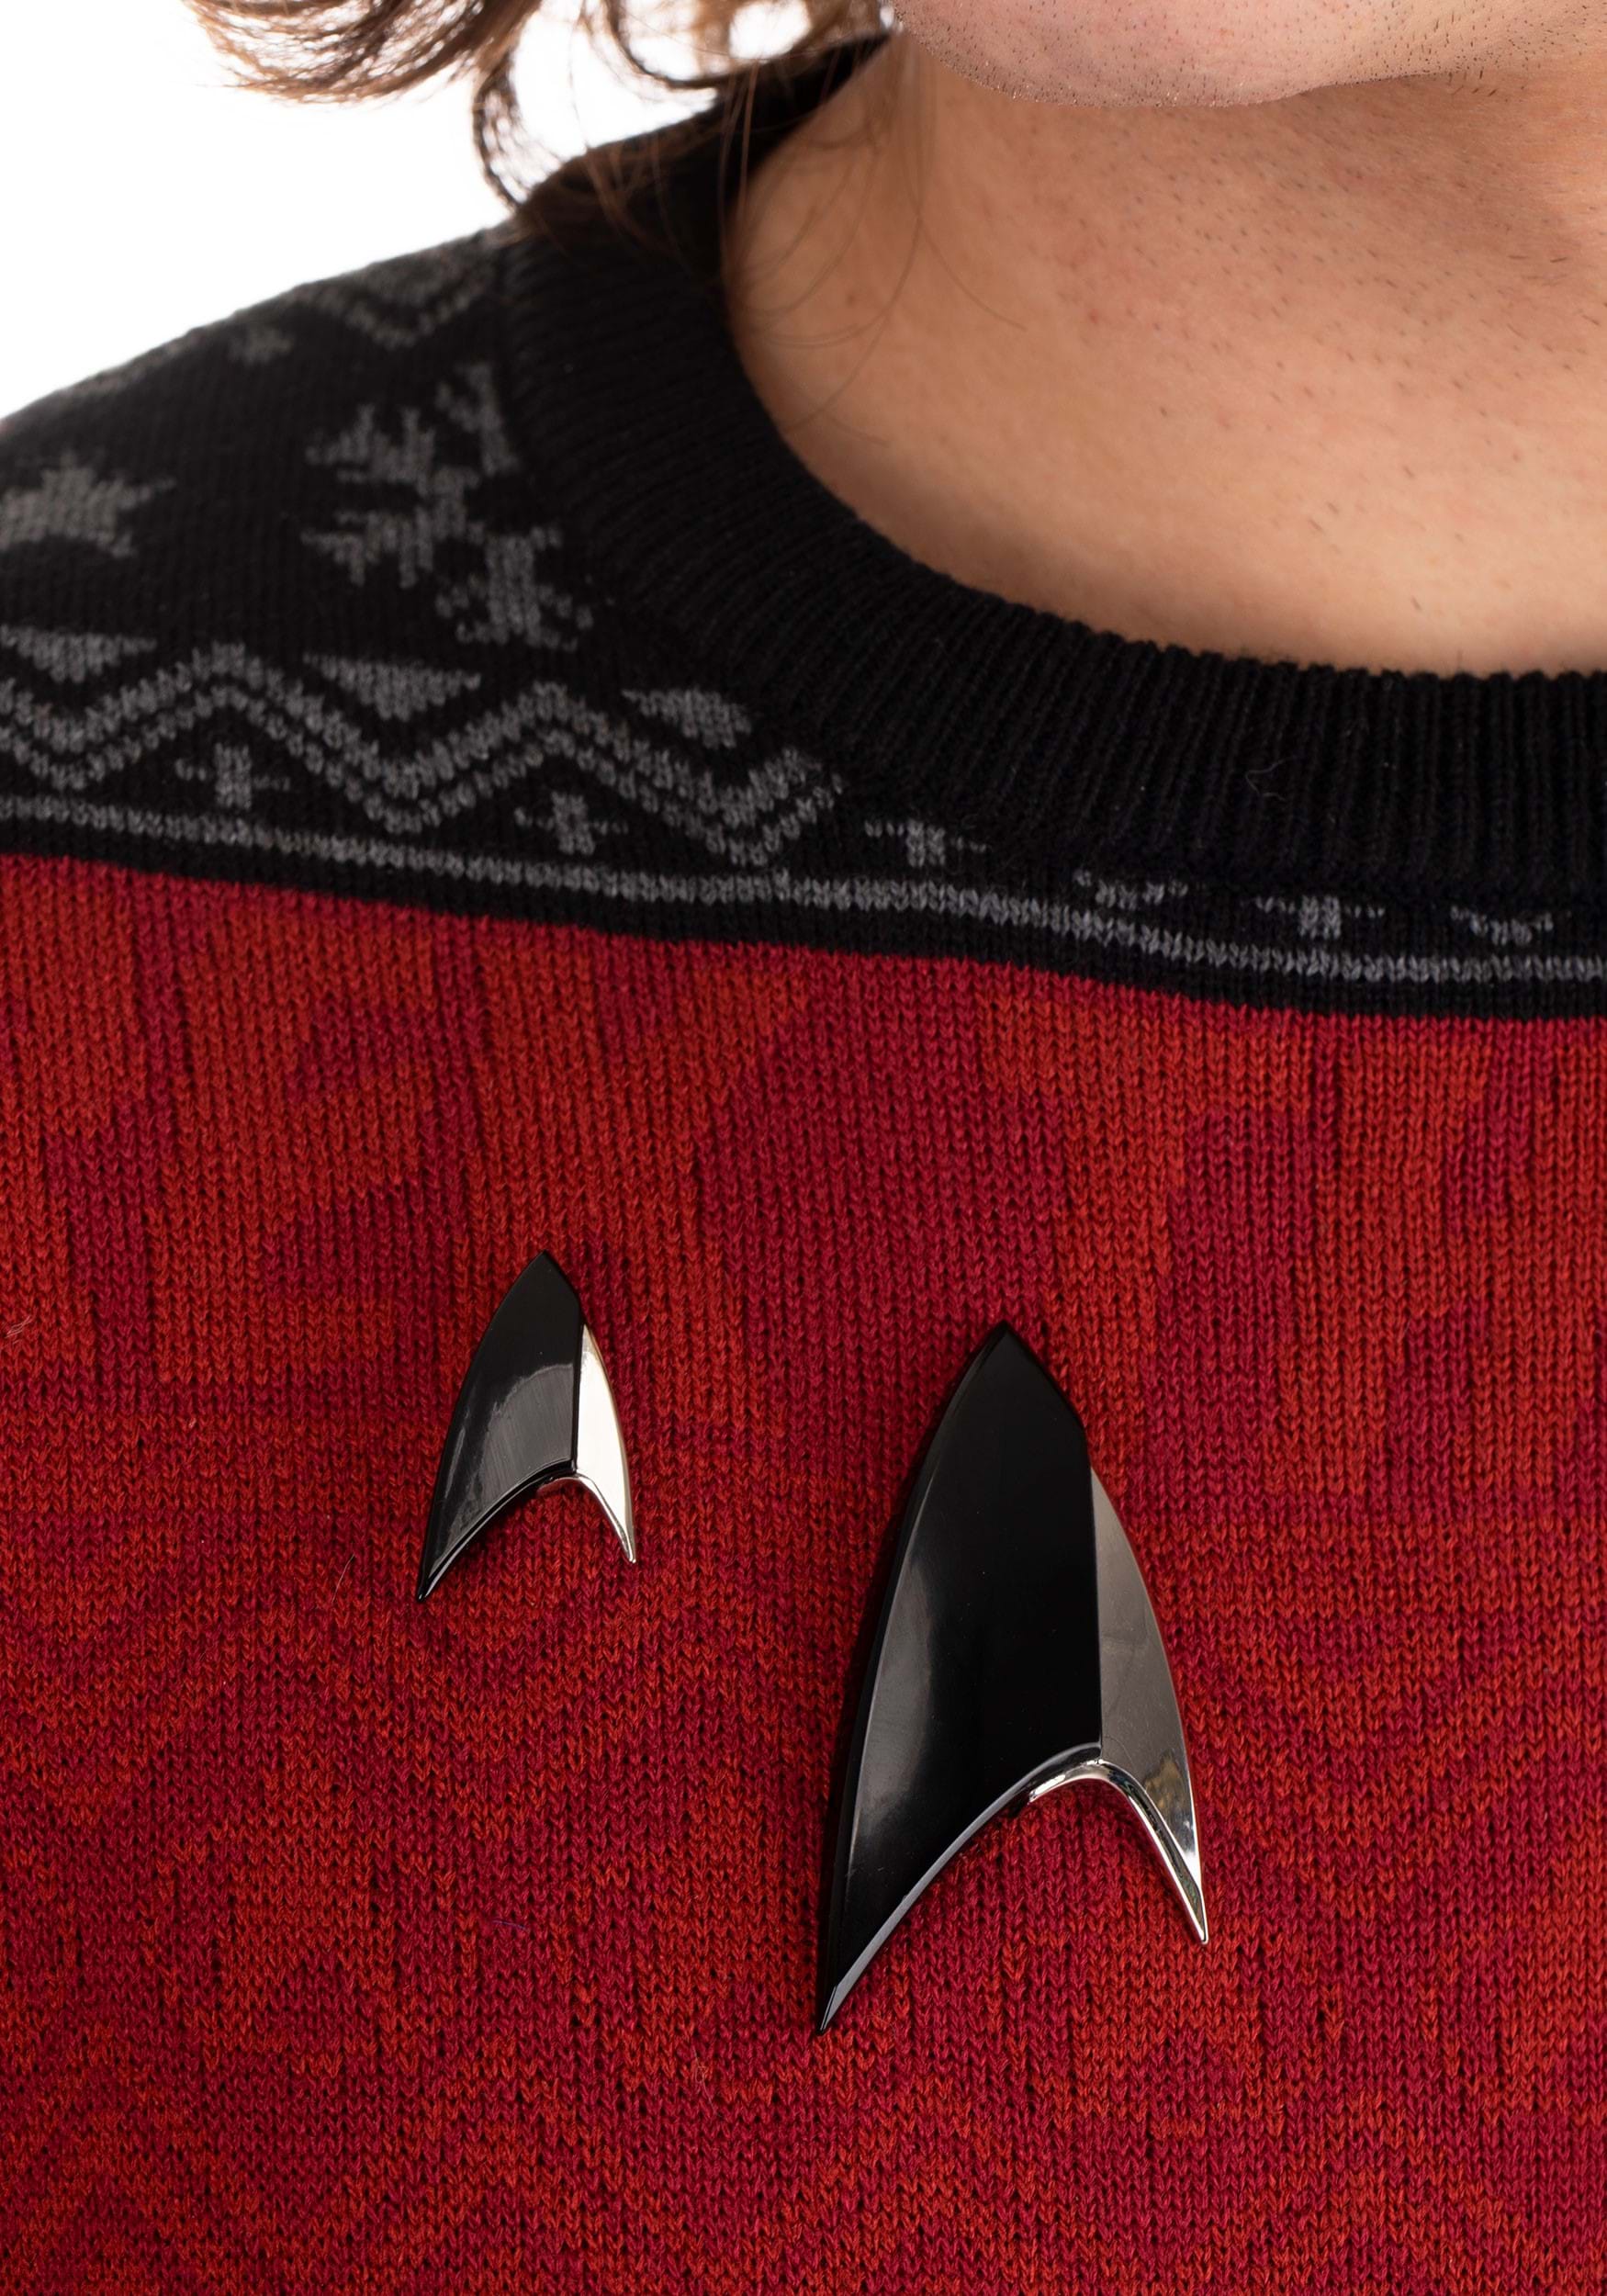 Black Badge Star Trek Discovery , Star Trek Accessories